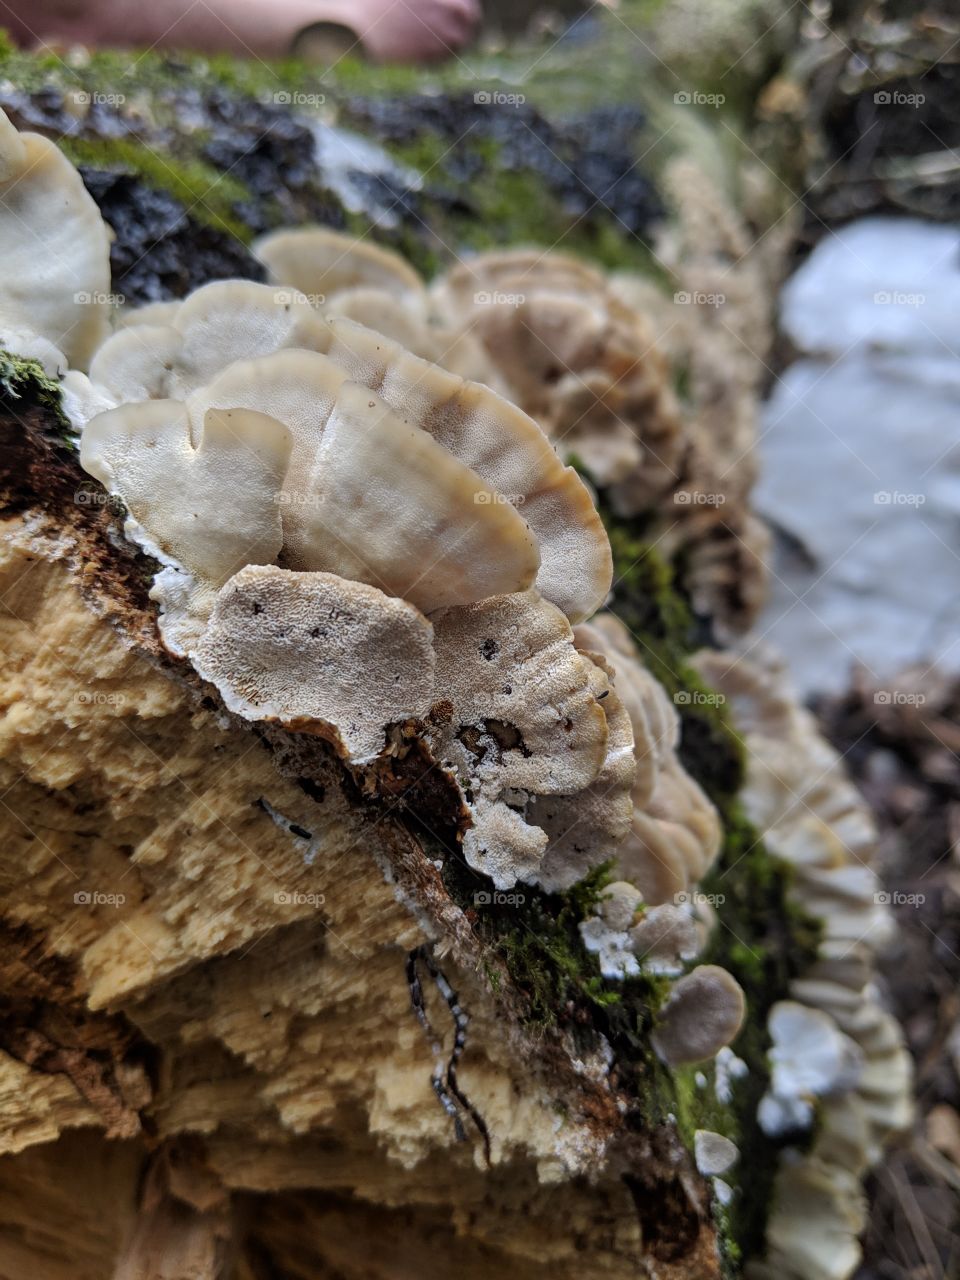 Fungus growing on a fallen down tree